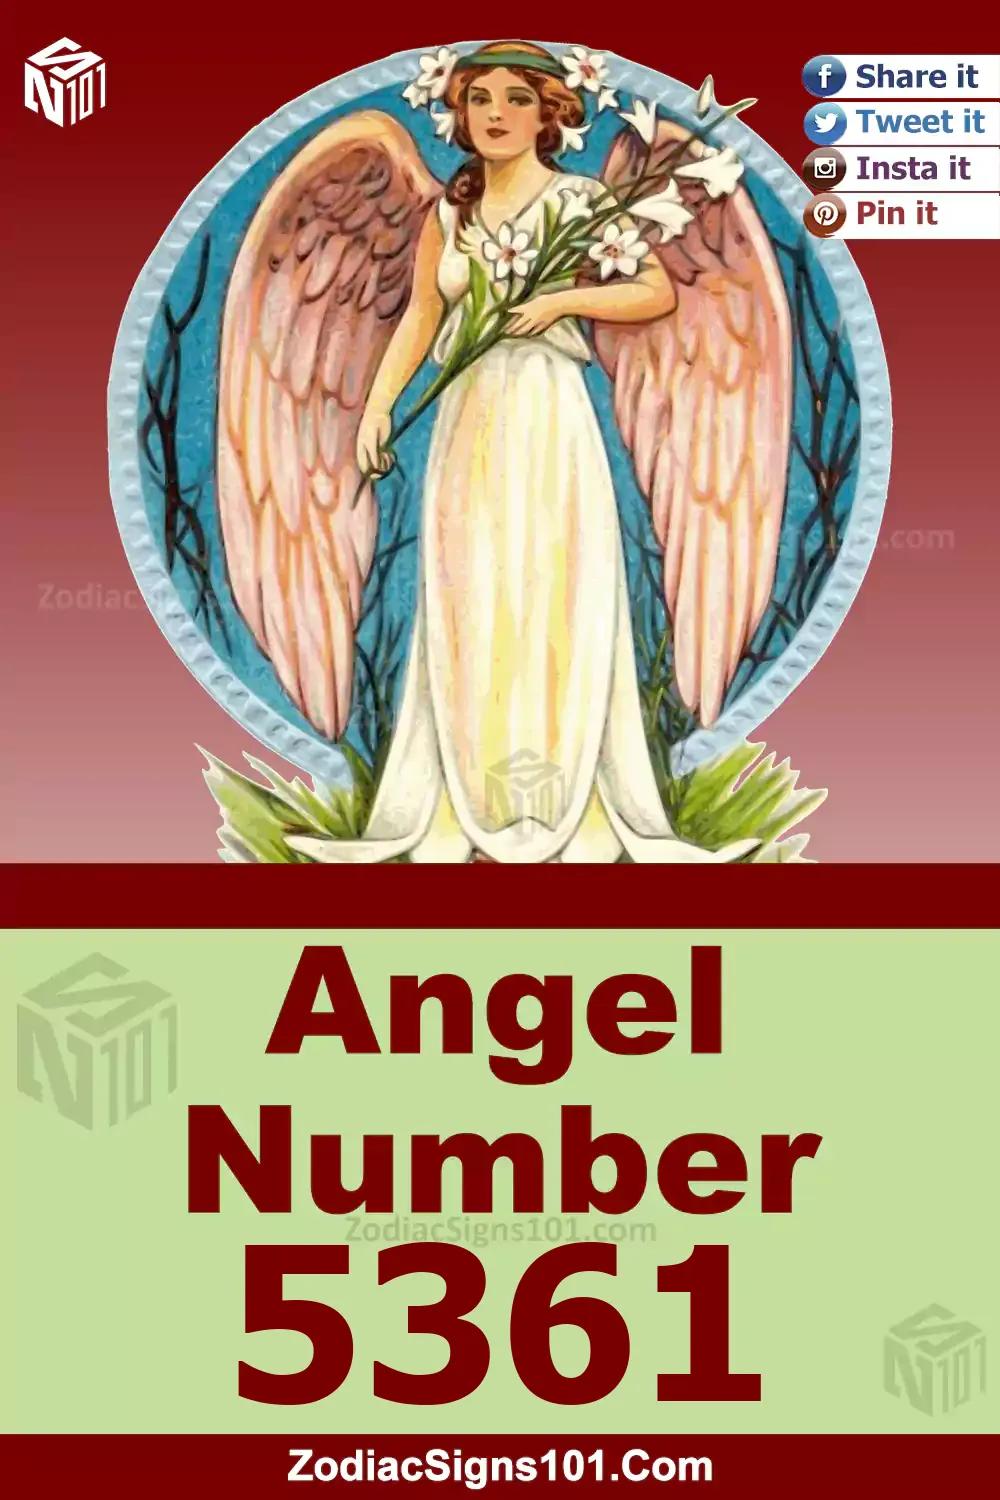 5361-Angel-Number-Meaning.jpg